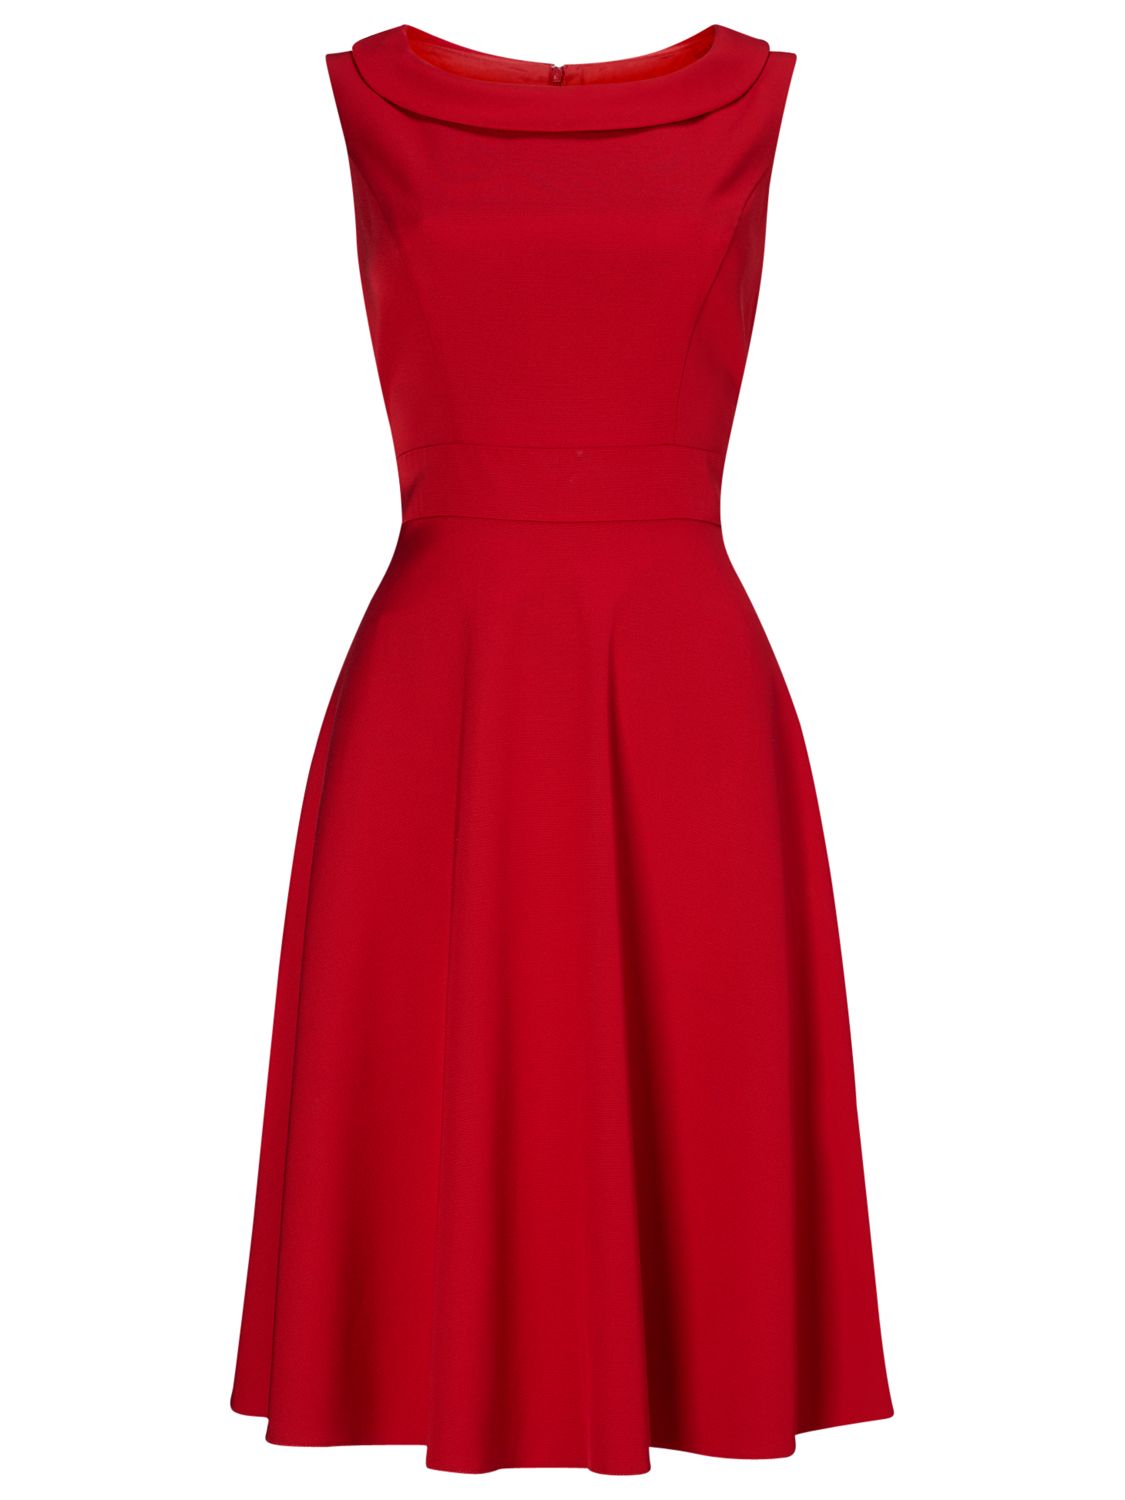 Buy Phase Eight Nicole Dress, Scarlet Red | John Lewis